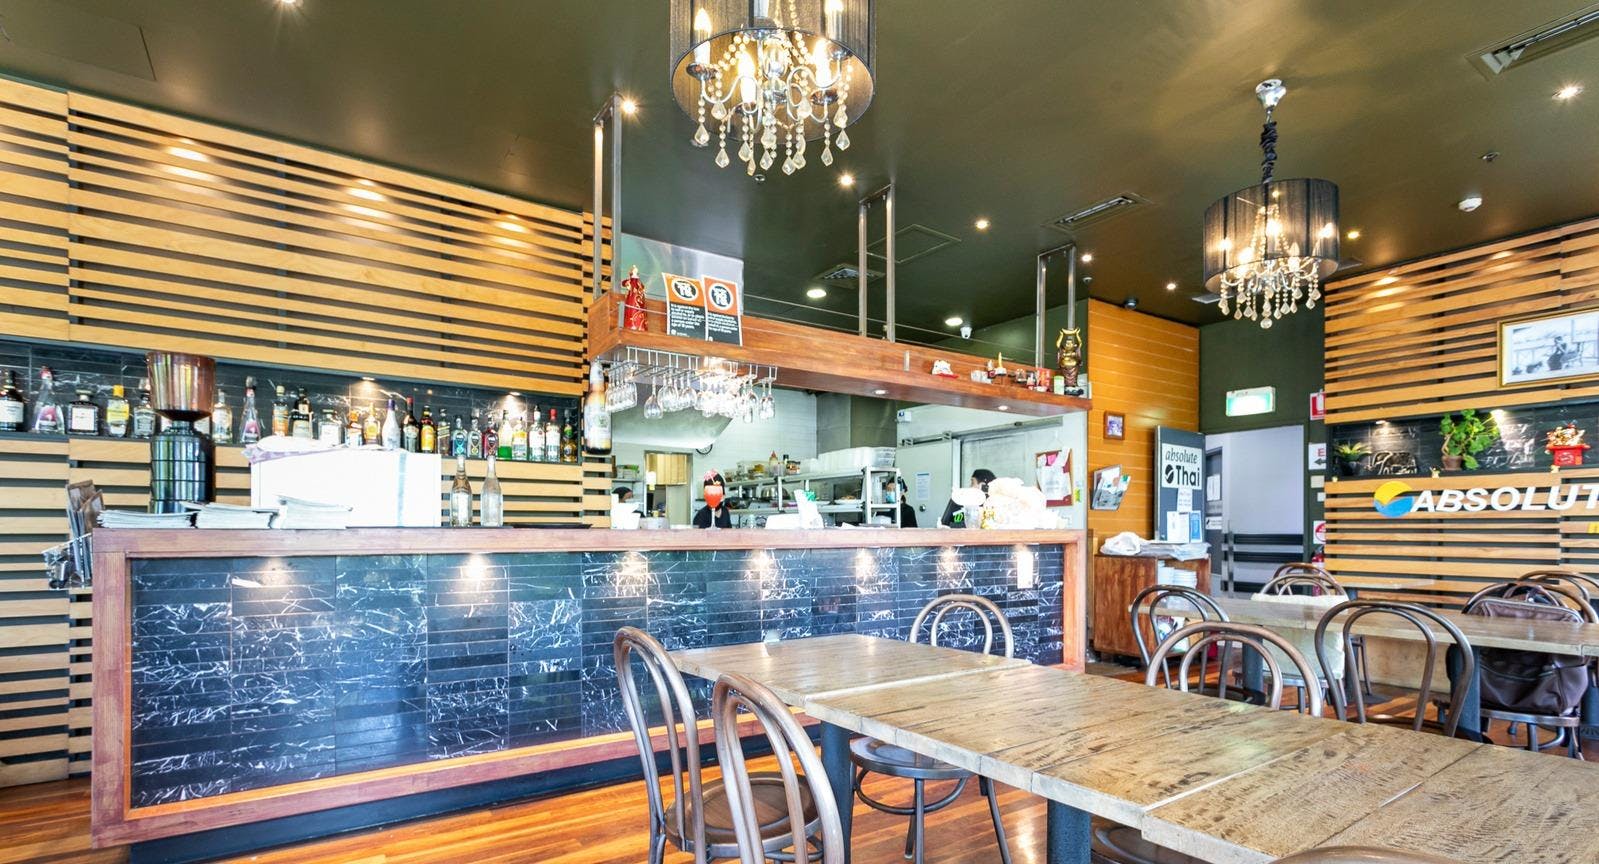 Photo of restaurant Absolute Thai - Berowra in Berowra, Sydney